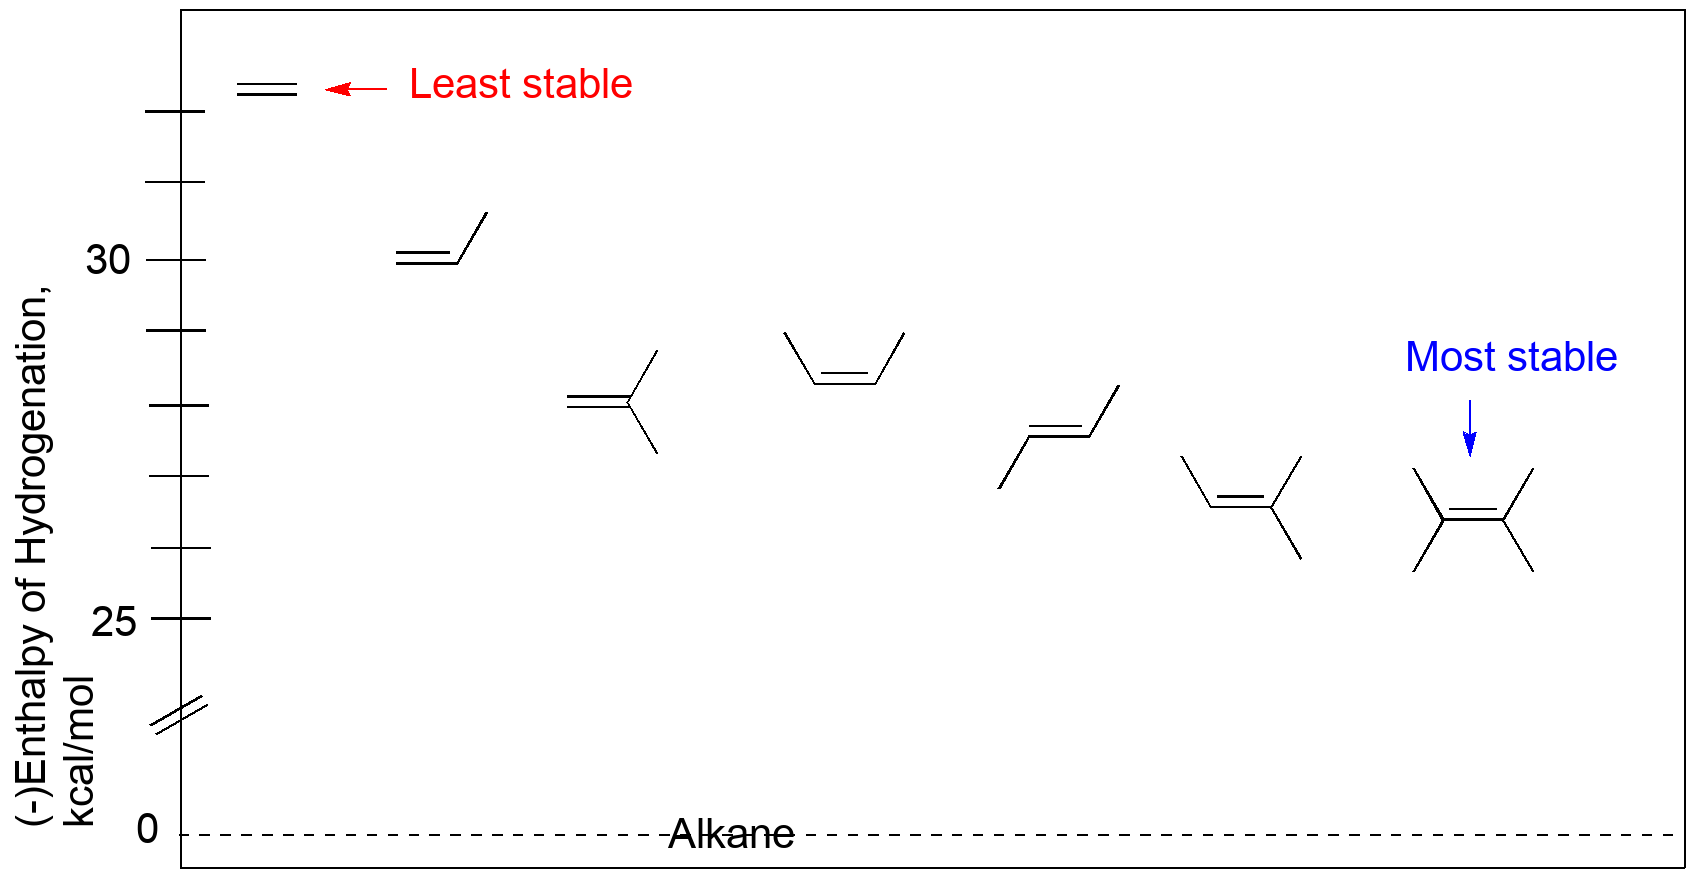 Ranking of alkene stability based on enthalpy of hydrogenation